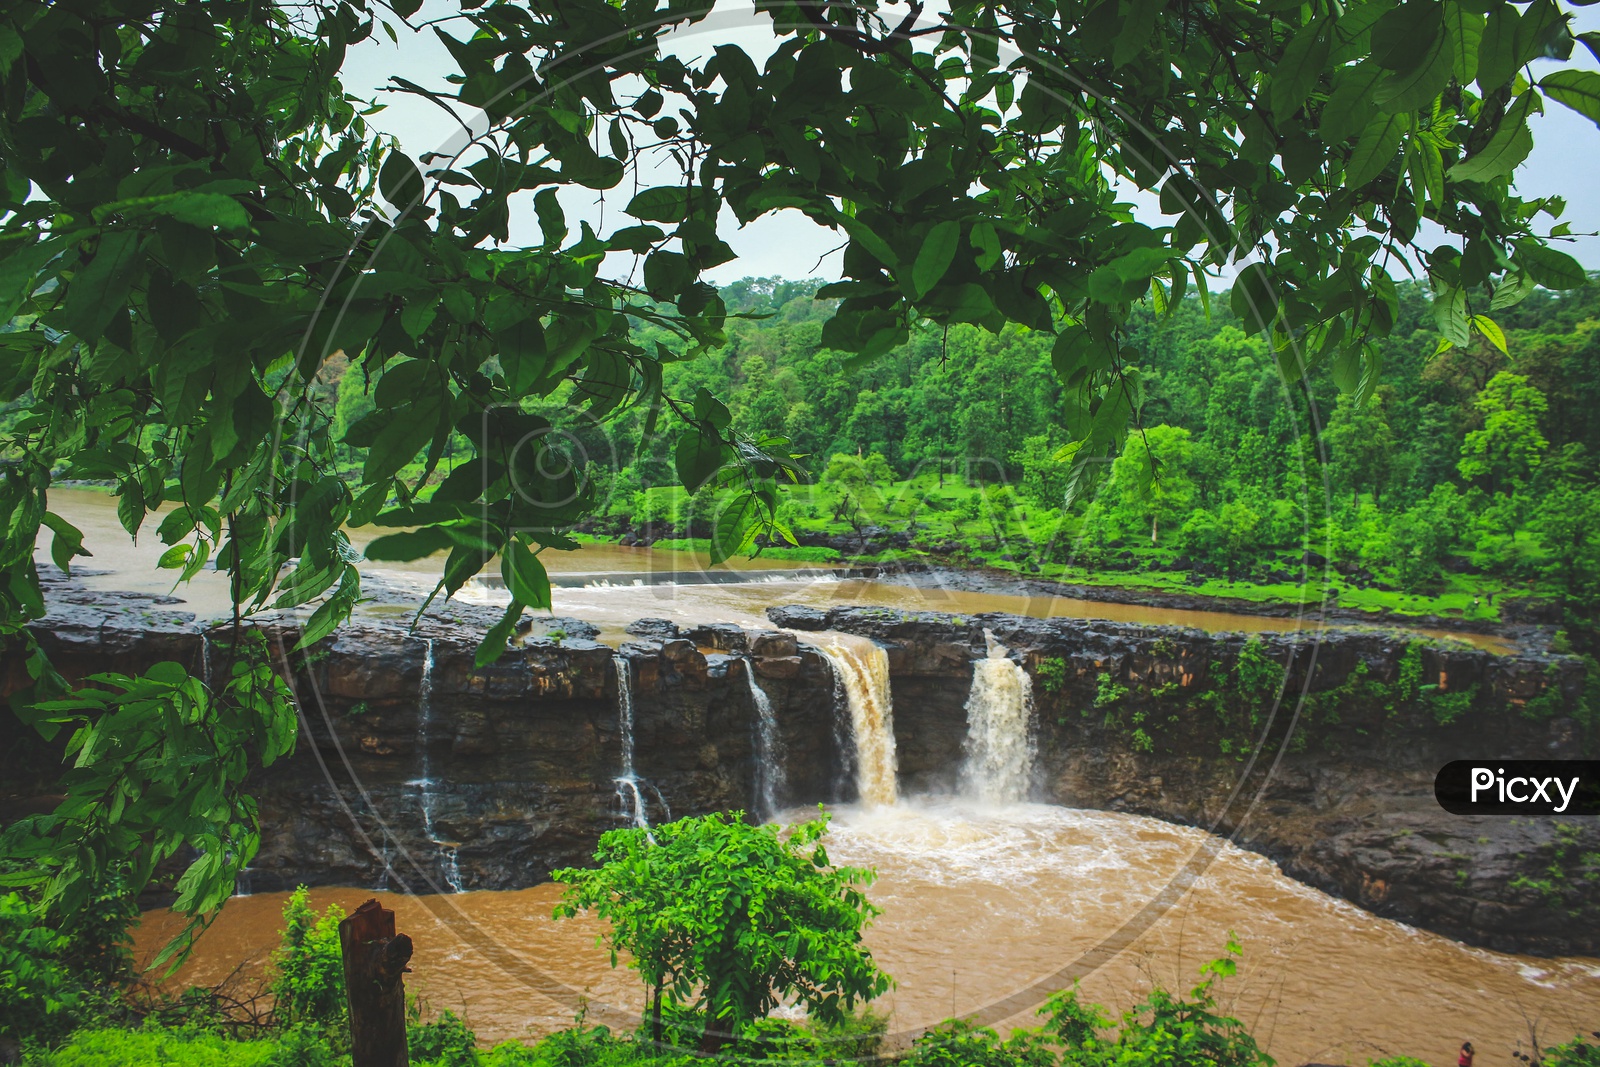 A Gira waterfalls